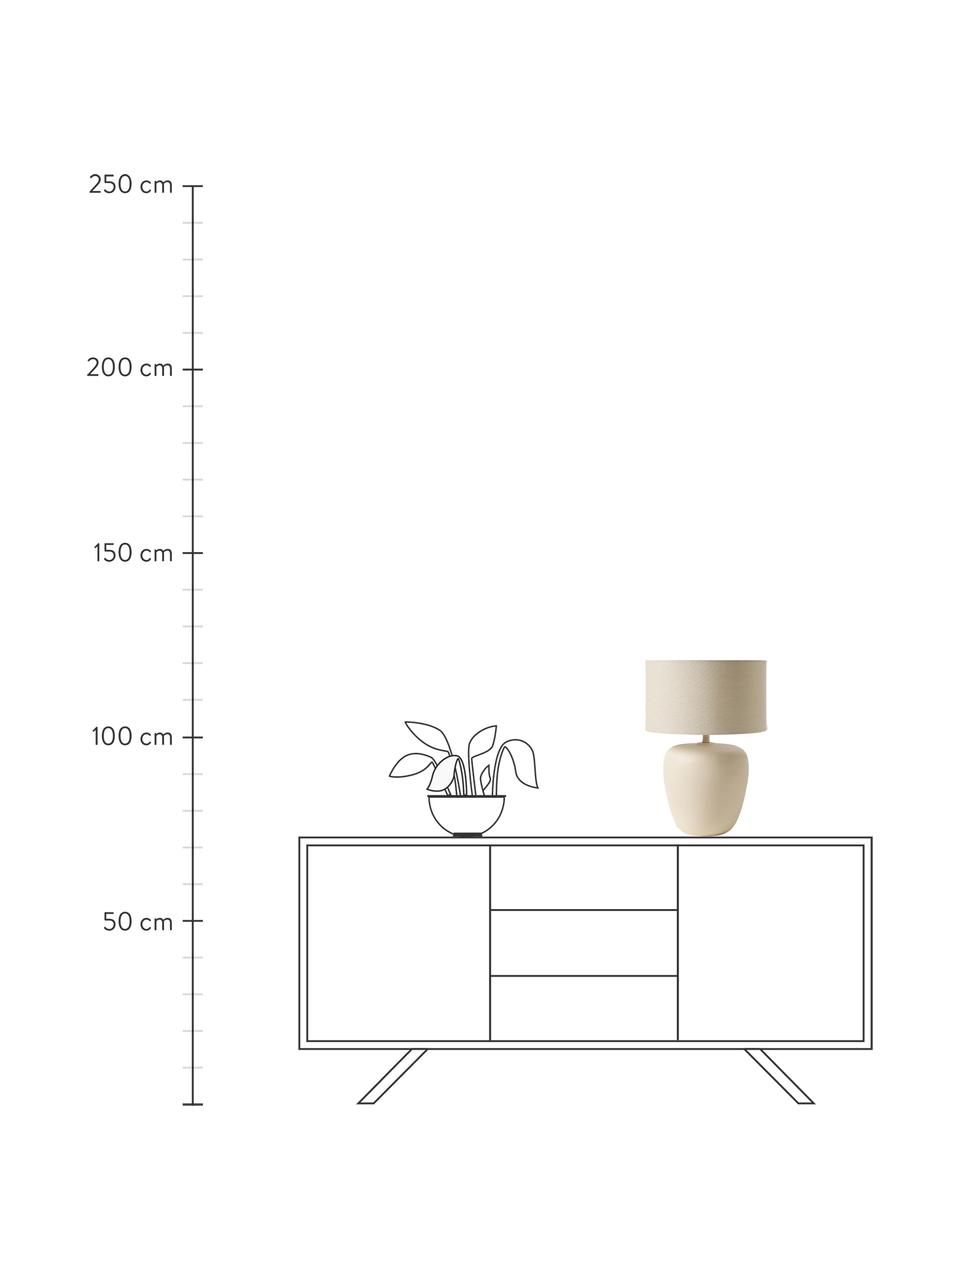 Lámpara de mesa grande de cerámica Eileen, Pantalla: lino (100% poliéster), Cable: cubierto en tela, Beige mate, Ø 33 x Al 48 cm